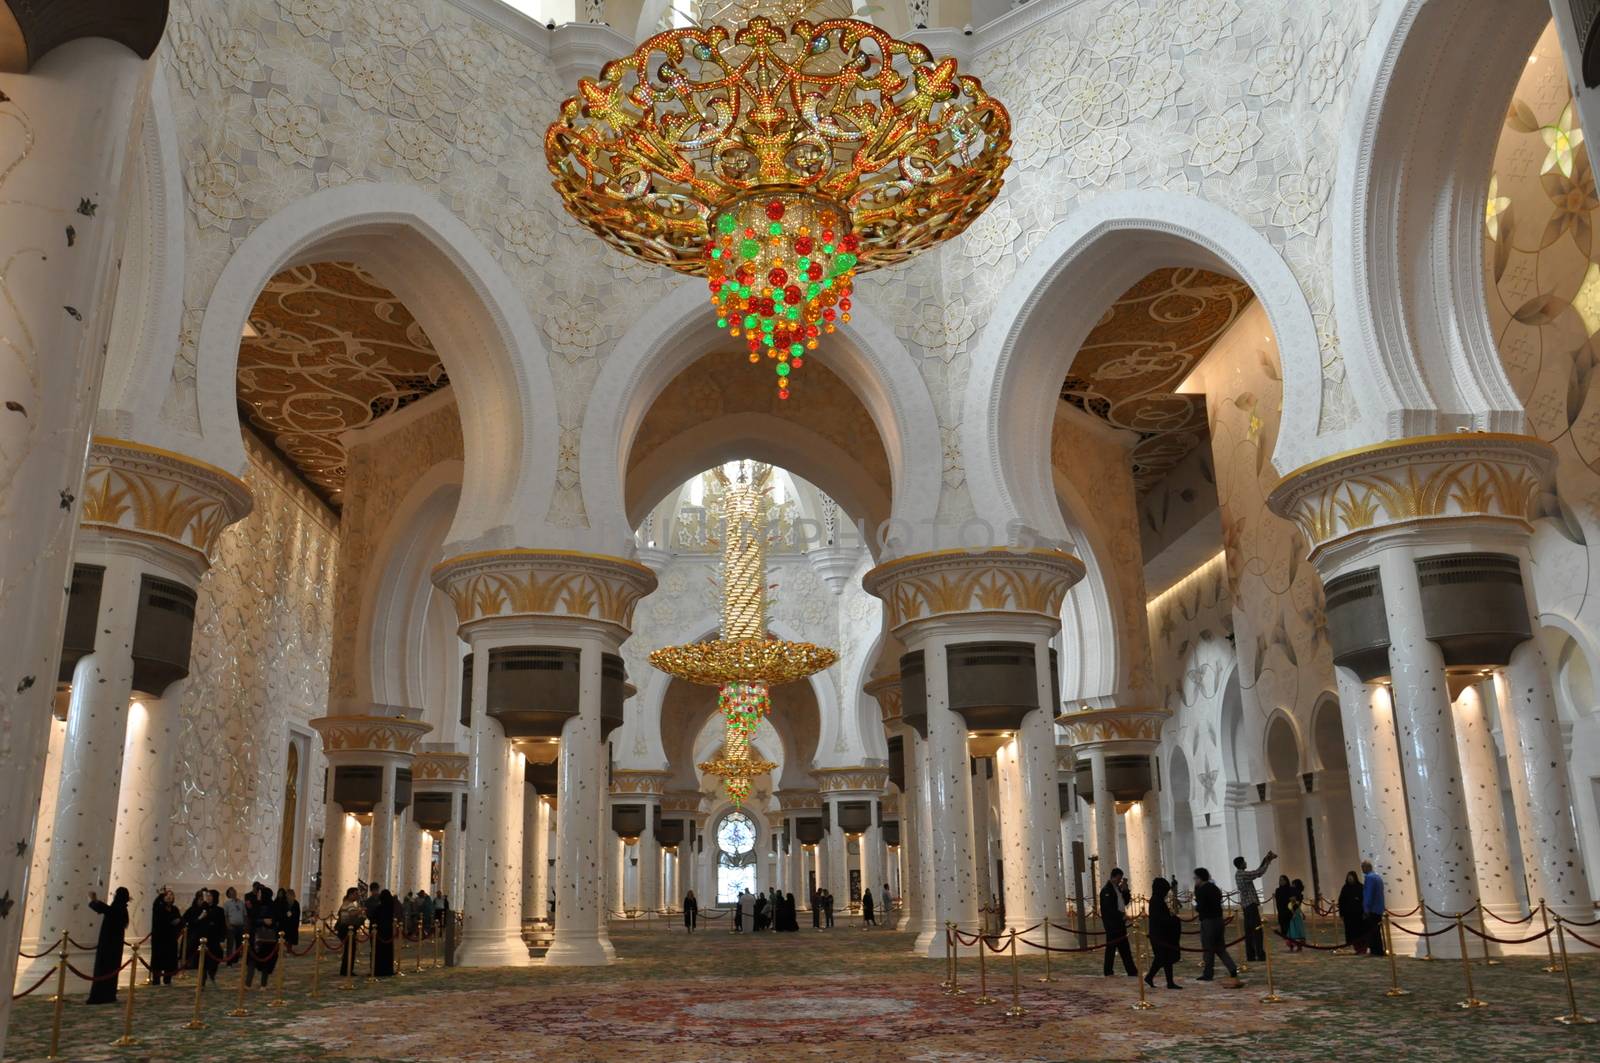 Magnificent interior of Sheikh Zayed Grand Mosque in Abu Dhabi, UAE by sainaniritu